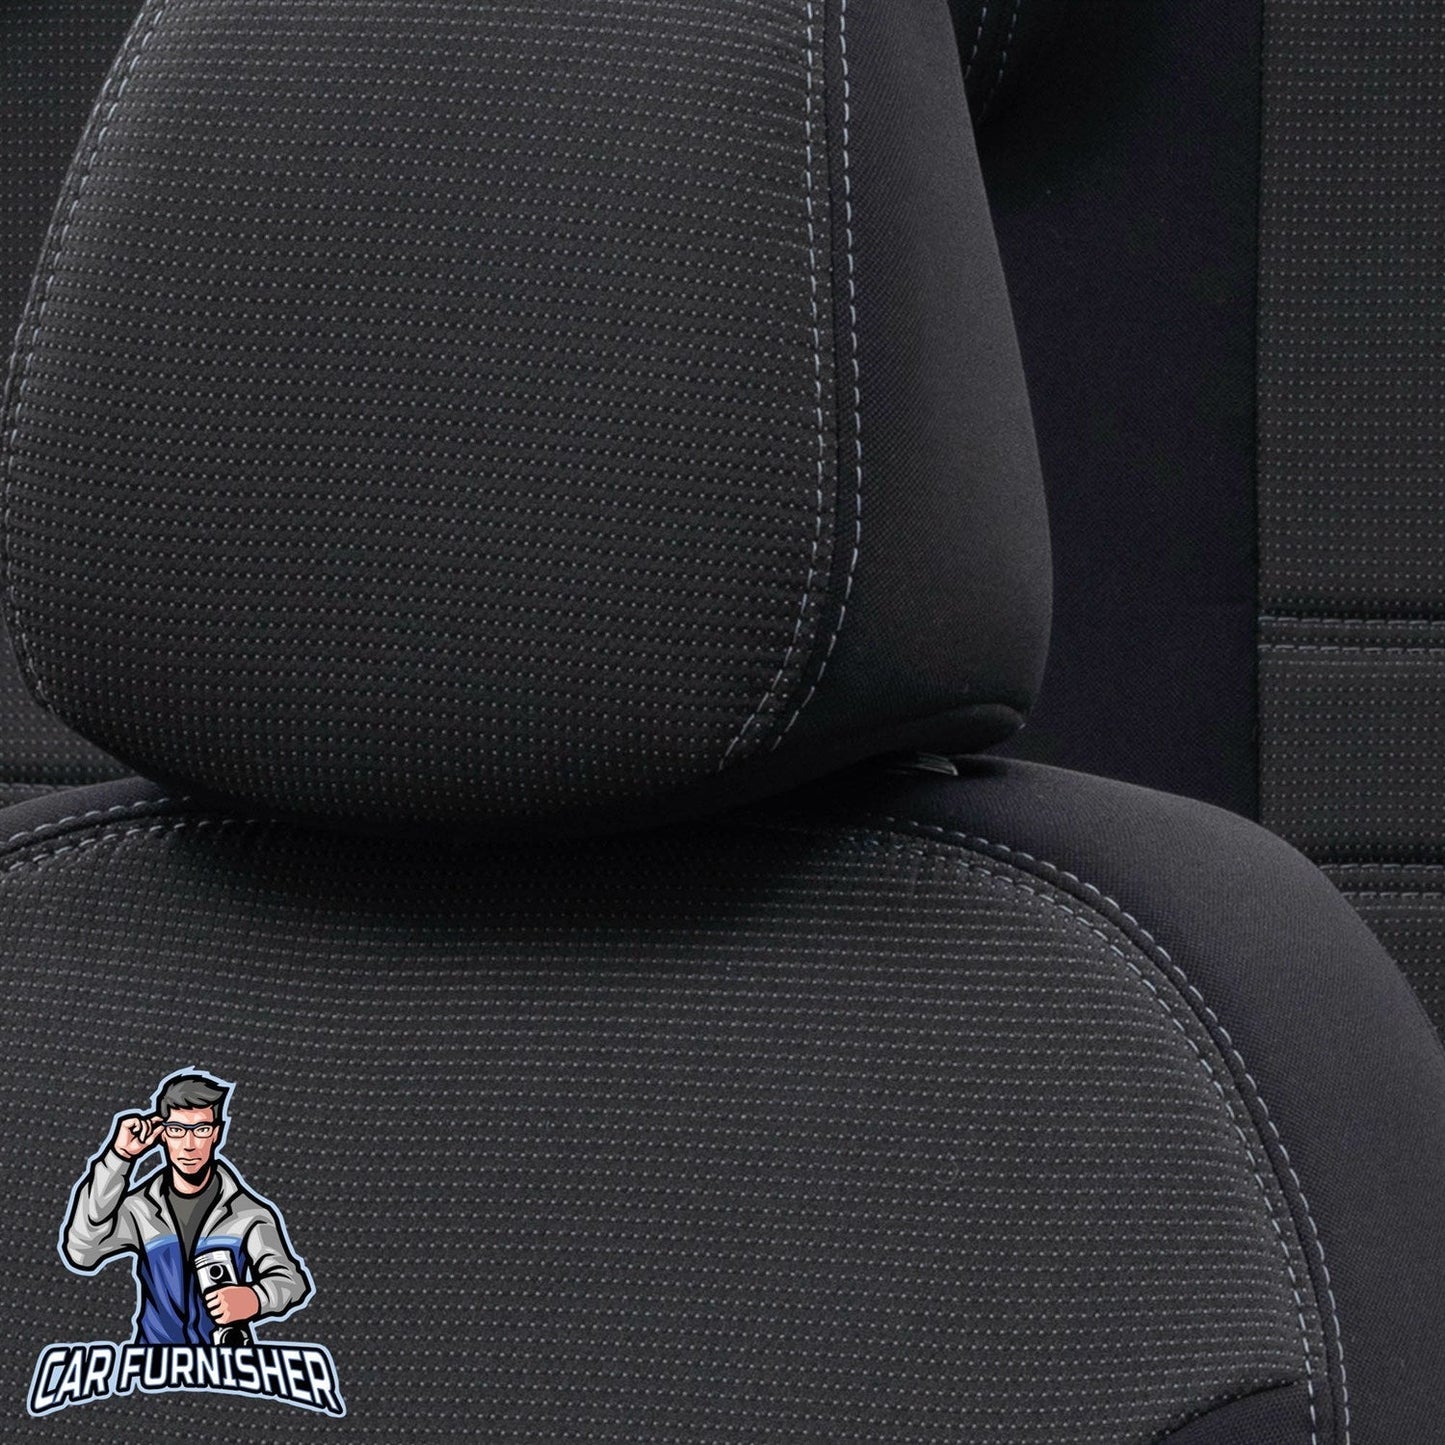 Ford B-Max Seat Covers Original Jacquard Design Dark Gray Jacquard Fabric